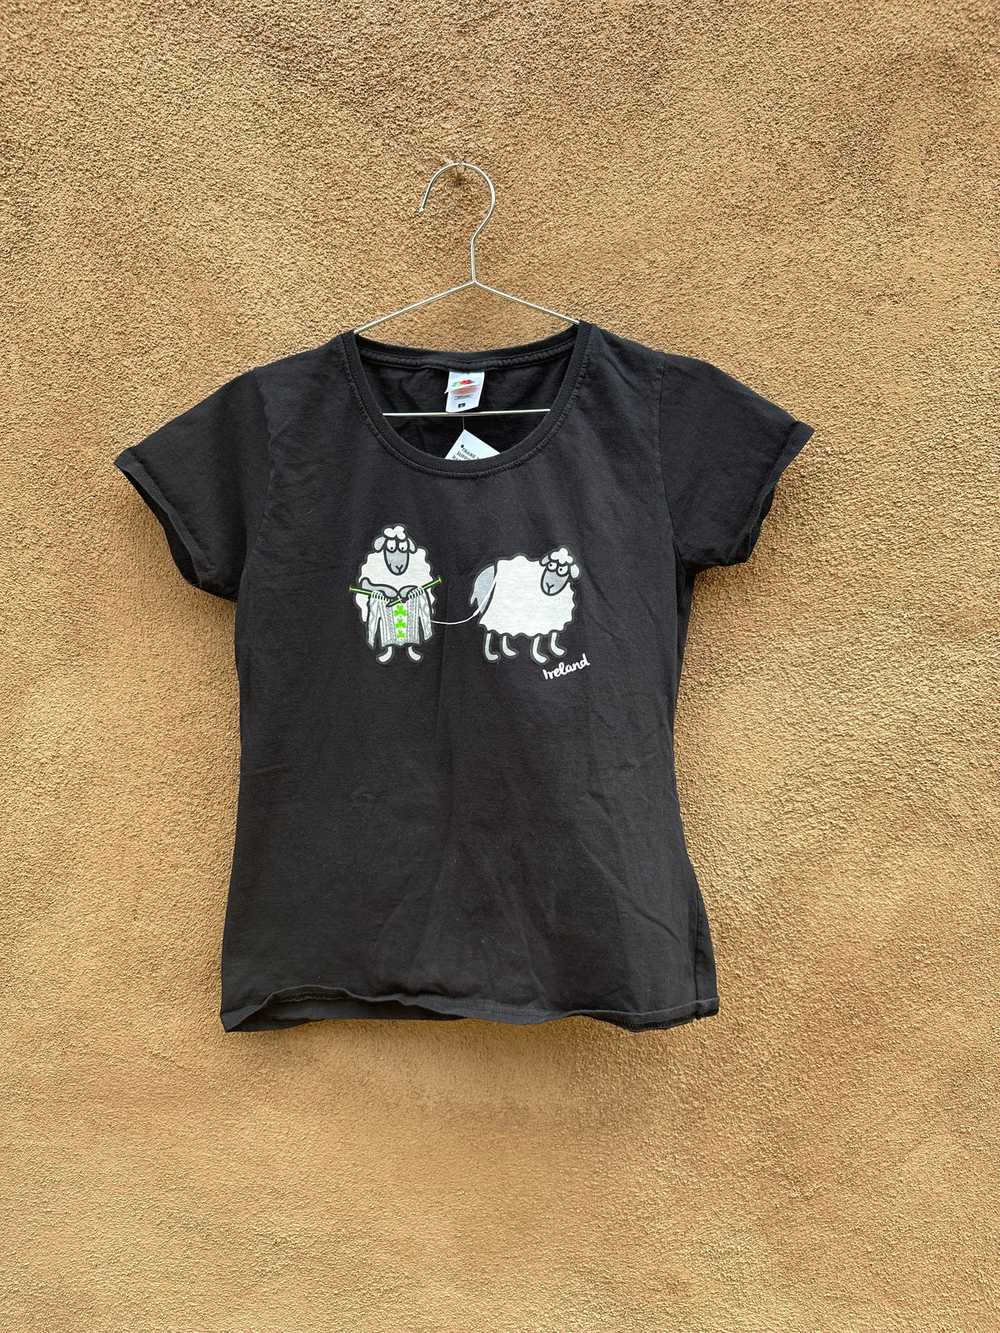 Ireland Knitting Sheep Black T-shirt - image 1